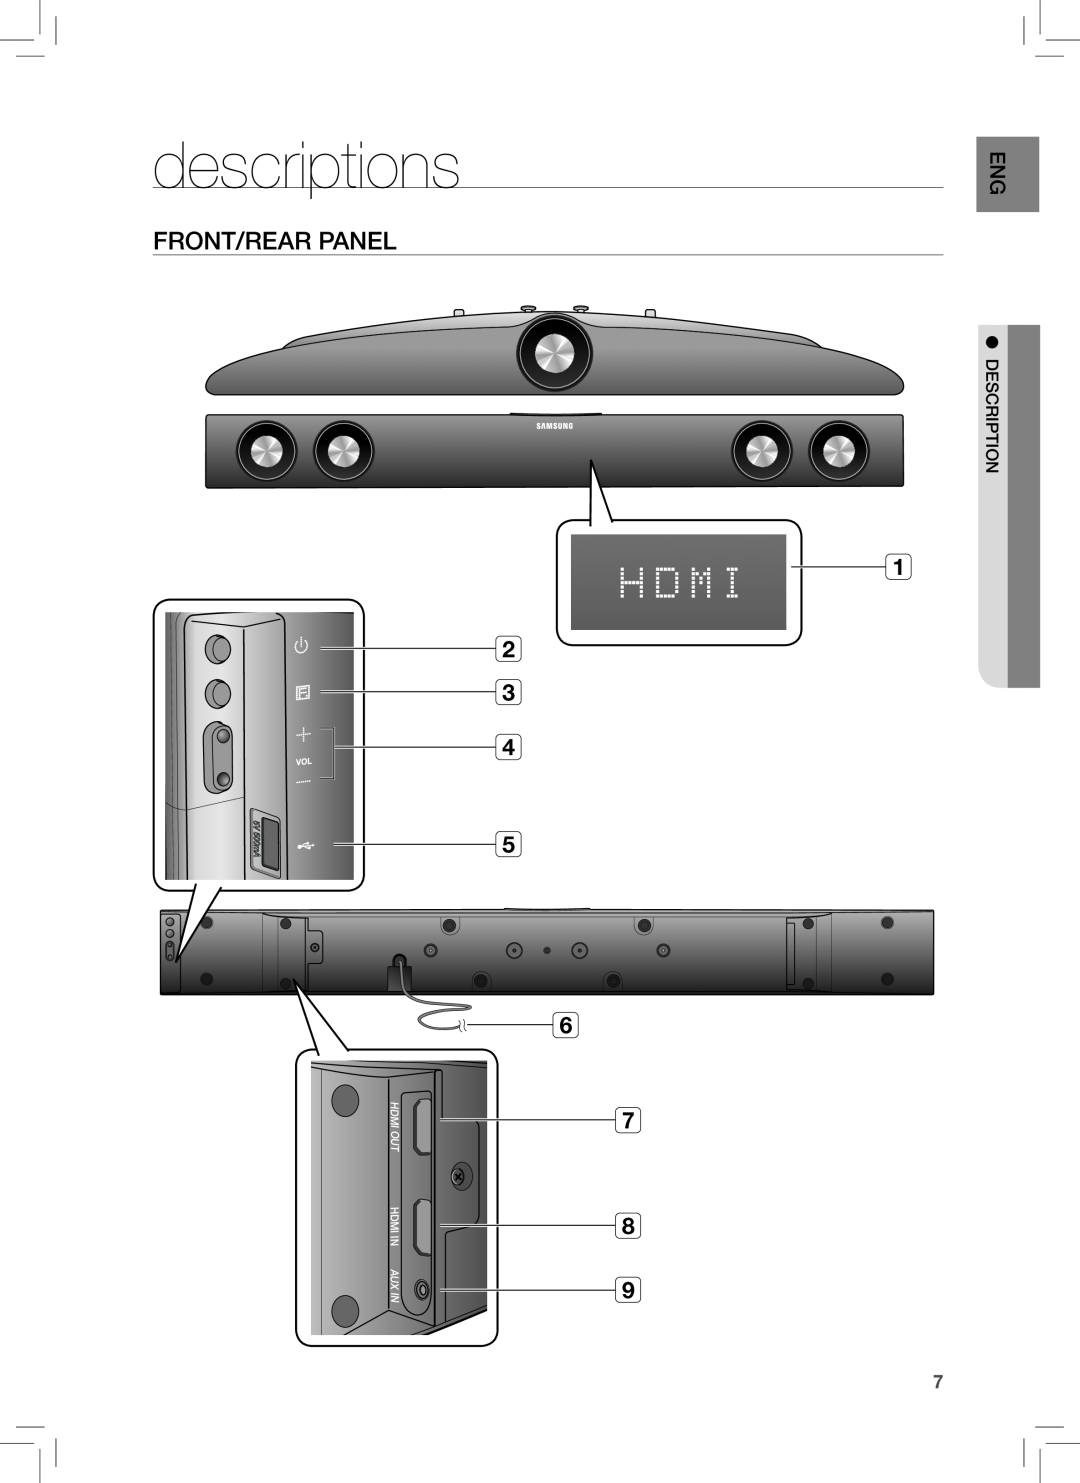 Samsung HW-E350 user manual descriptions, Front/Rear Panel, Hdmi, Auxin, 500mA 